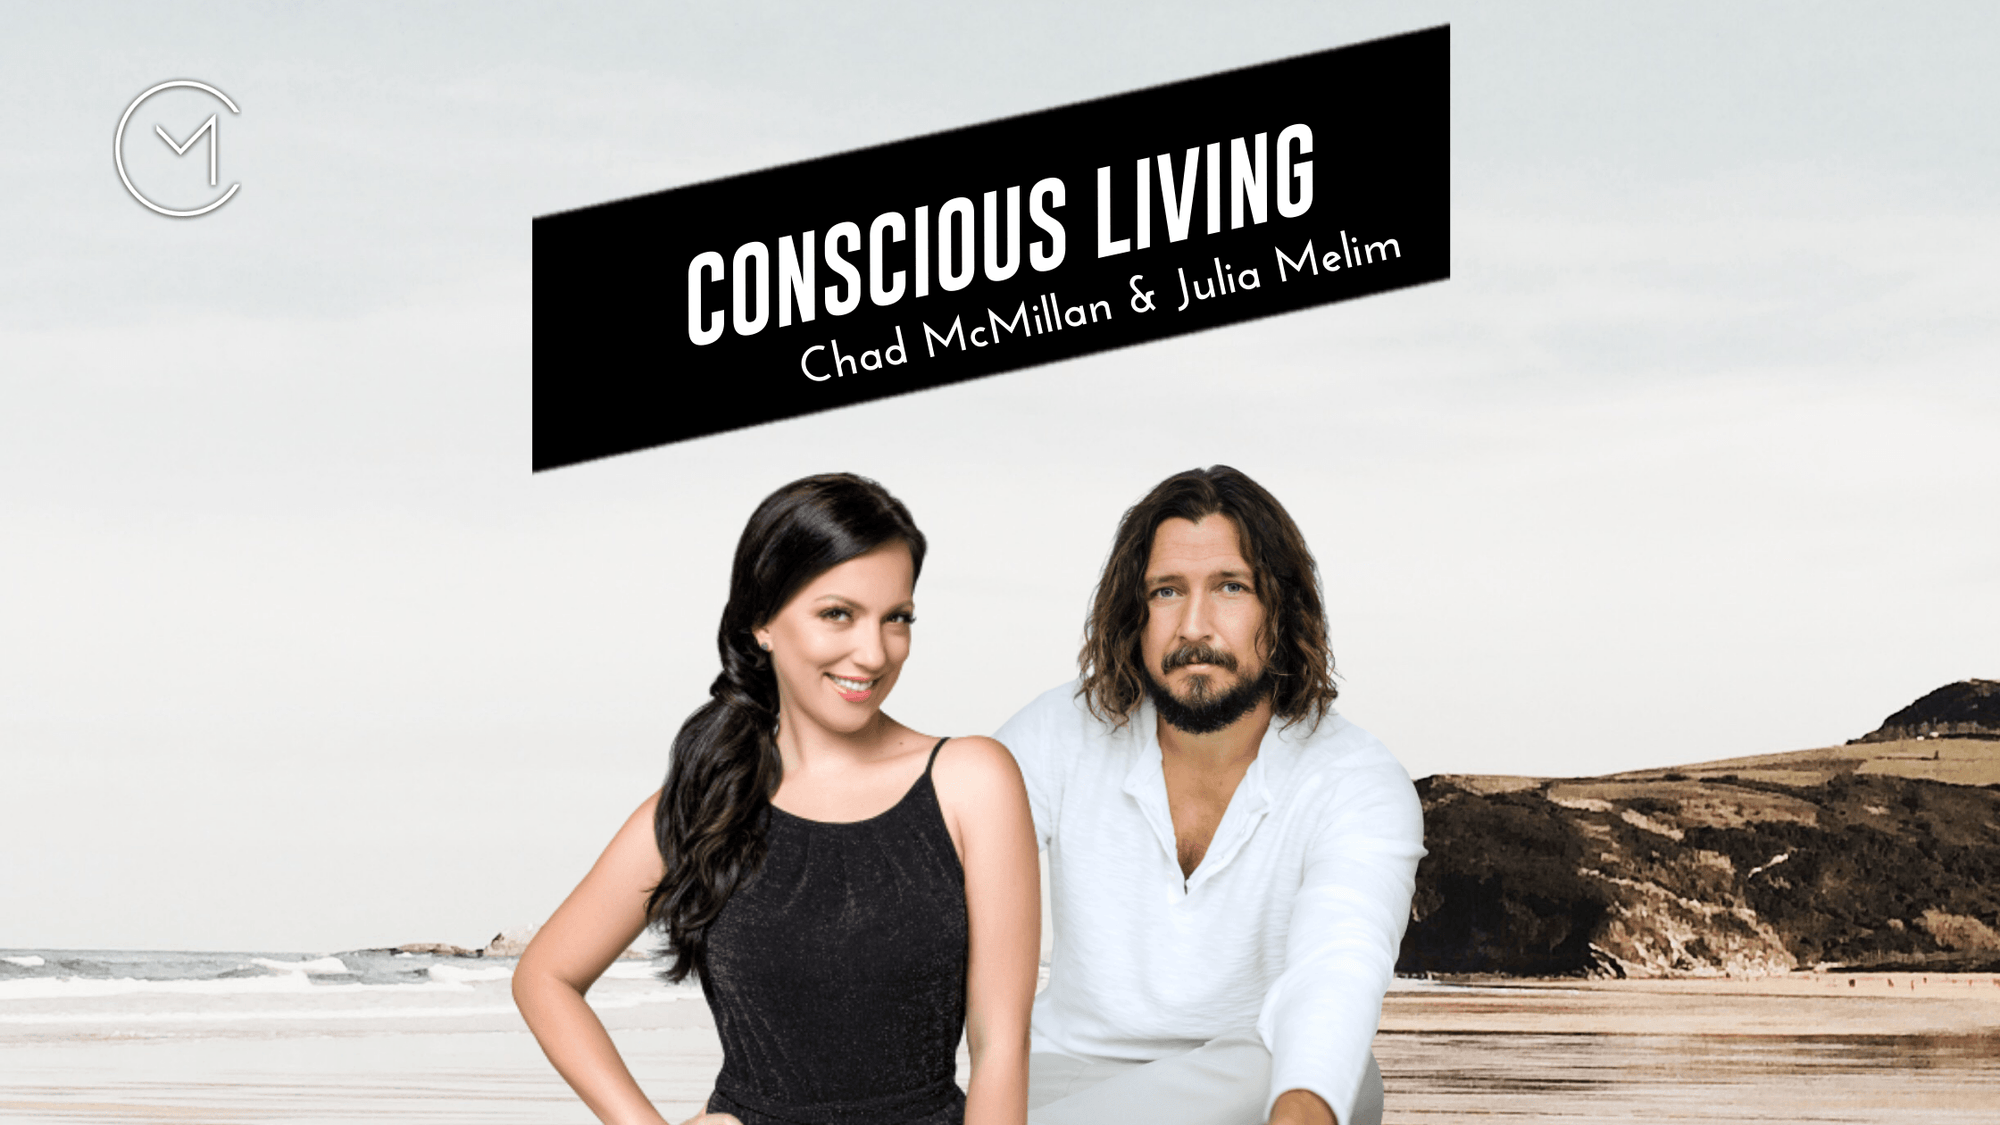 Conscious Living - Chad McMillan & Julia Melim